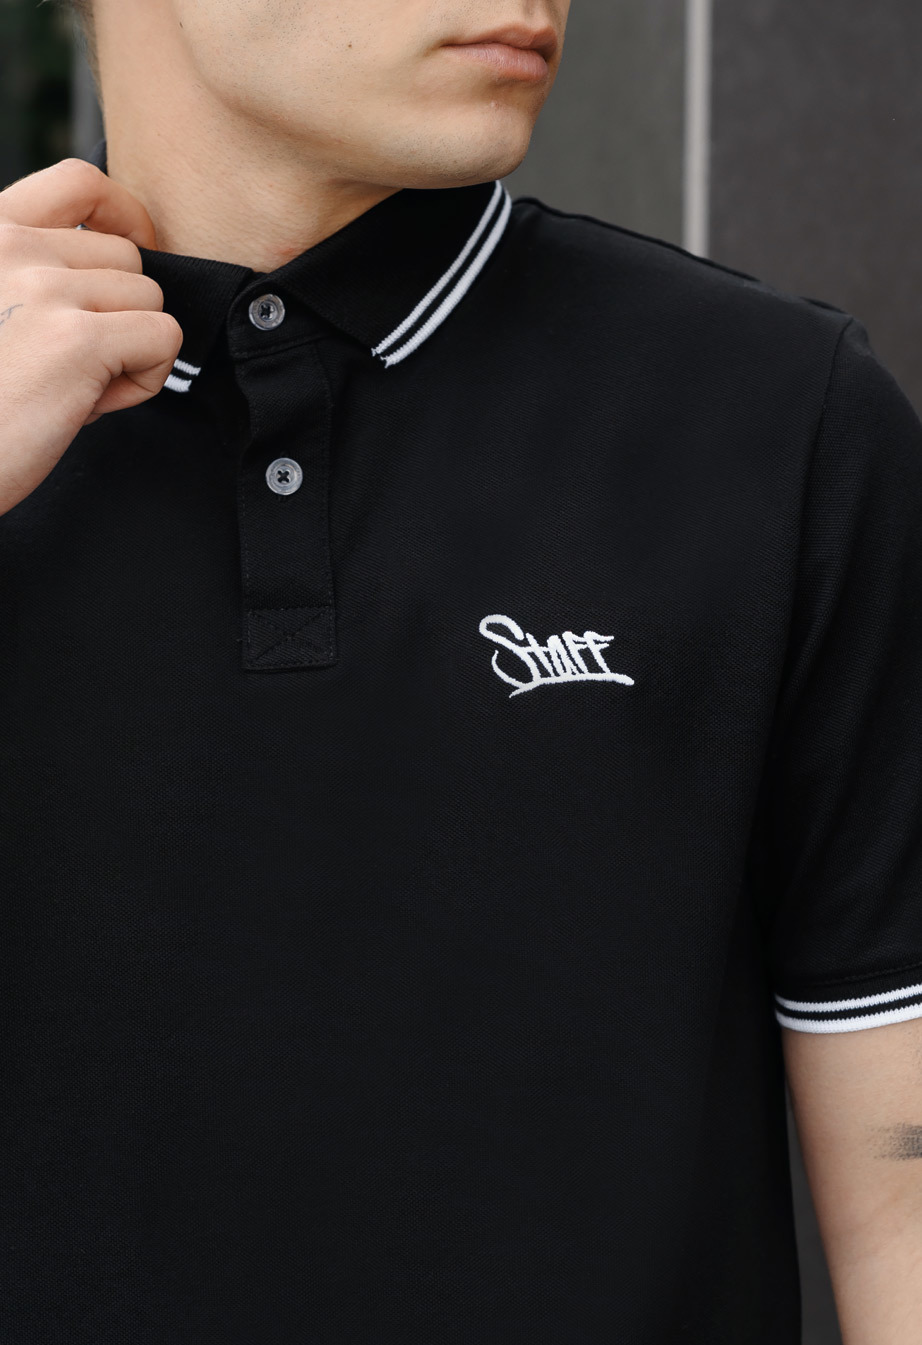 Koszulka polo Staff black logo2